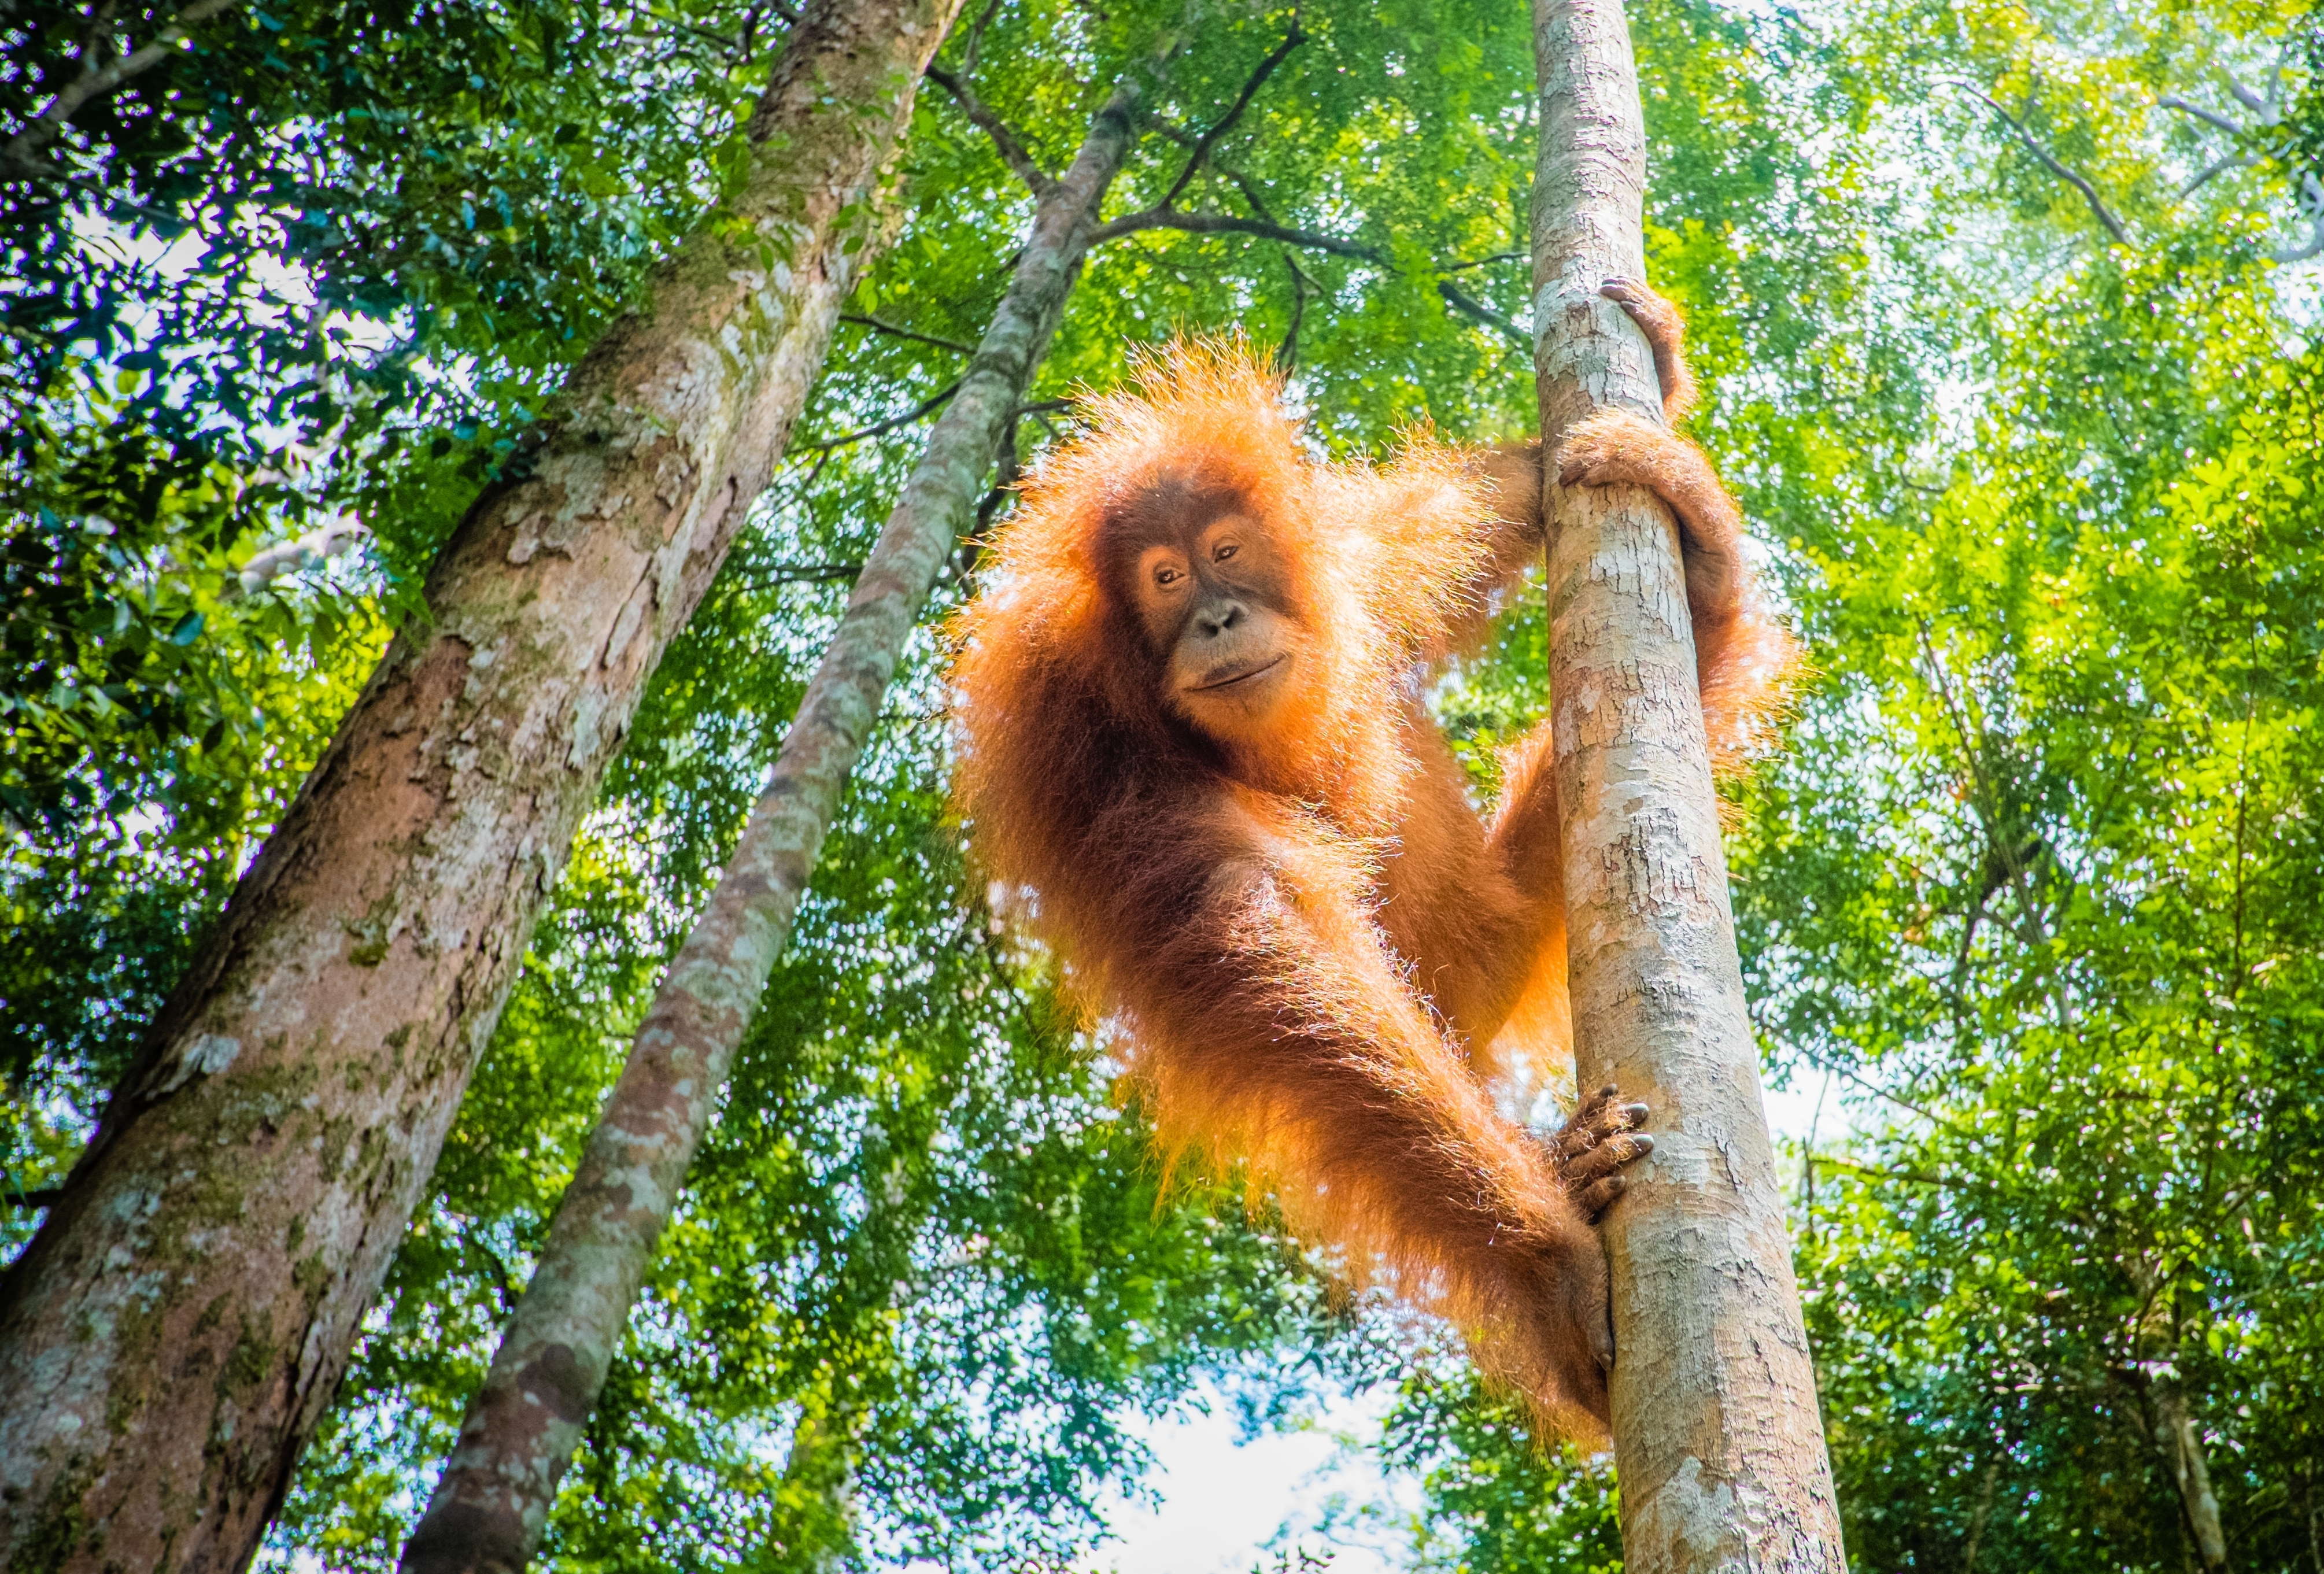 An “activist” orangutan fights off bulldozer to save home